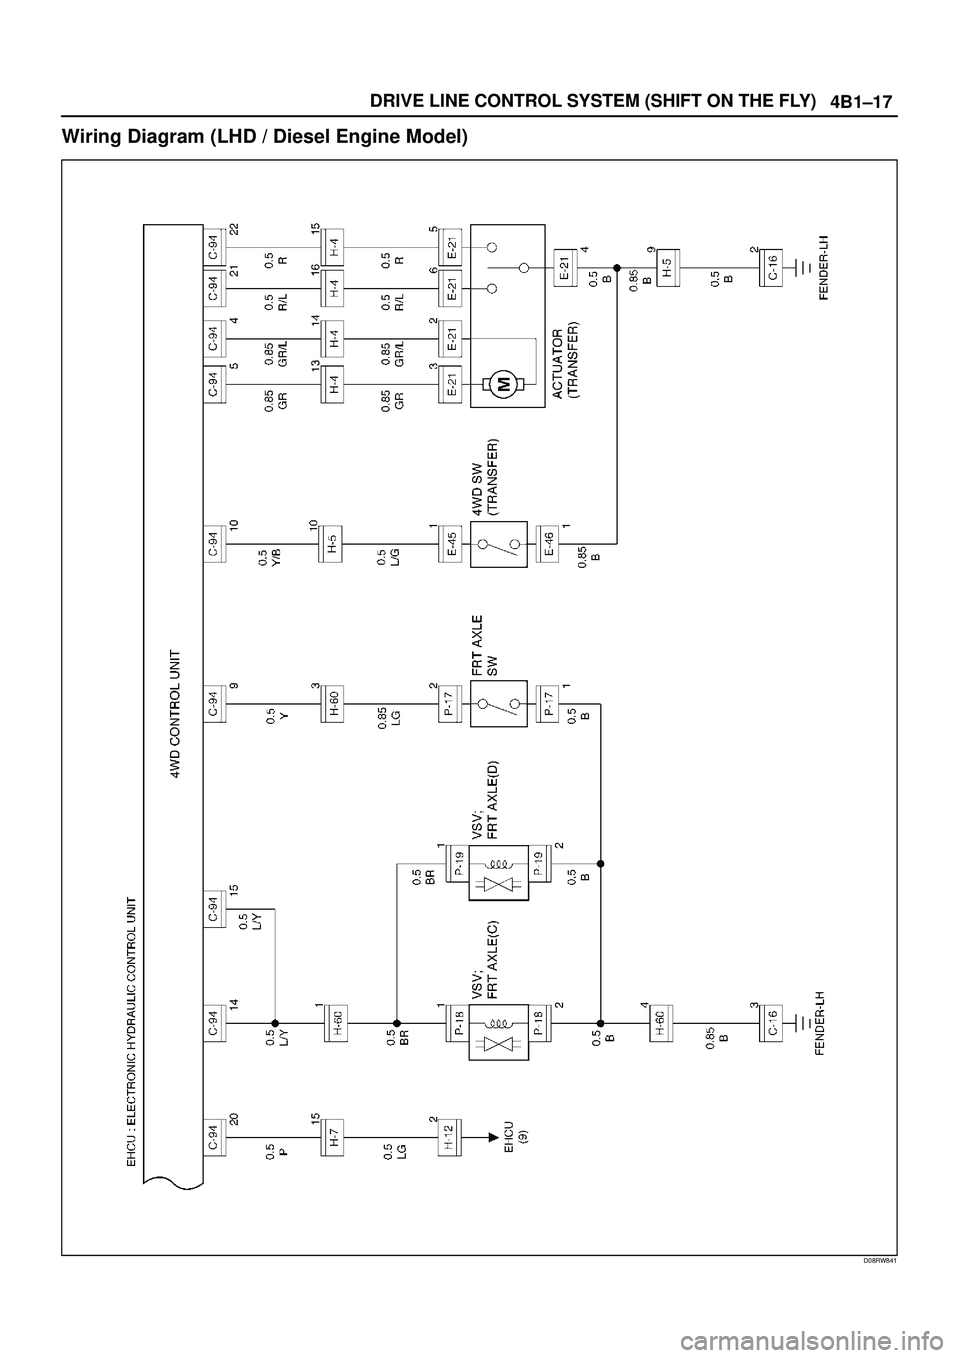 ISUZU TROOPER 1998  Service Repair Manual 4B1±17 DRIVE LINE CONTROL SYSTEM (SHIFT ON THE FLY)
Wiring Diagram (LHD / Diesel Engine Model)
D08RW841 